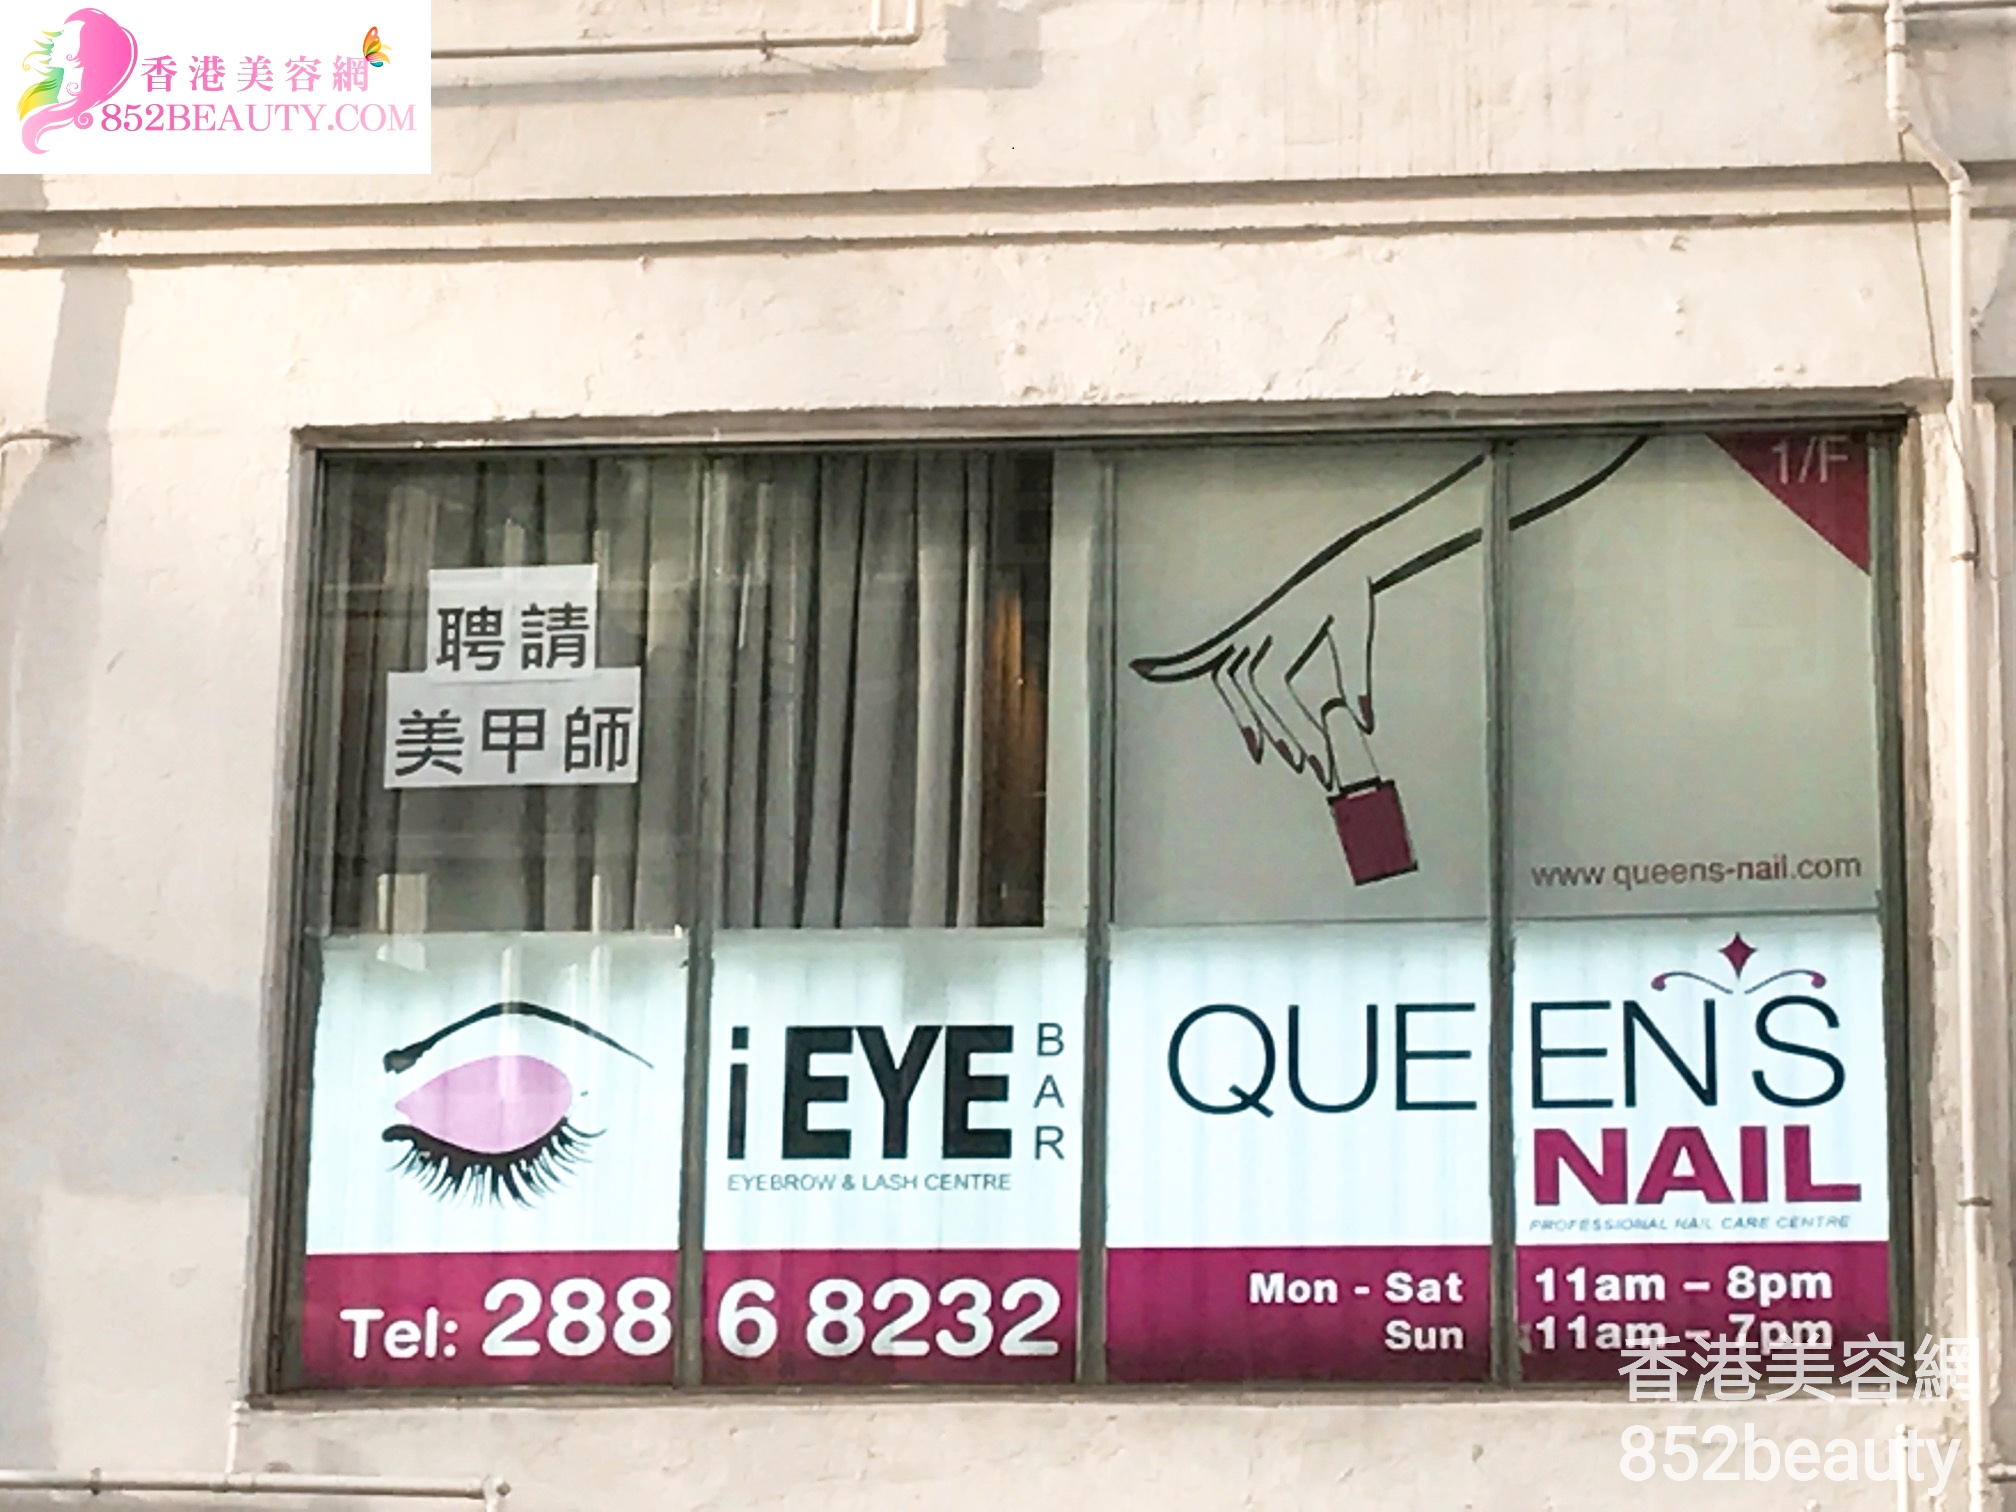 Manicure: iEye Bar - Queen's Nail